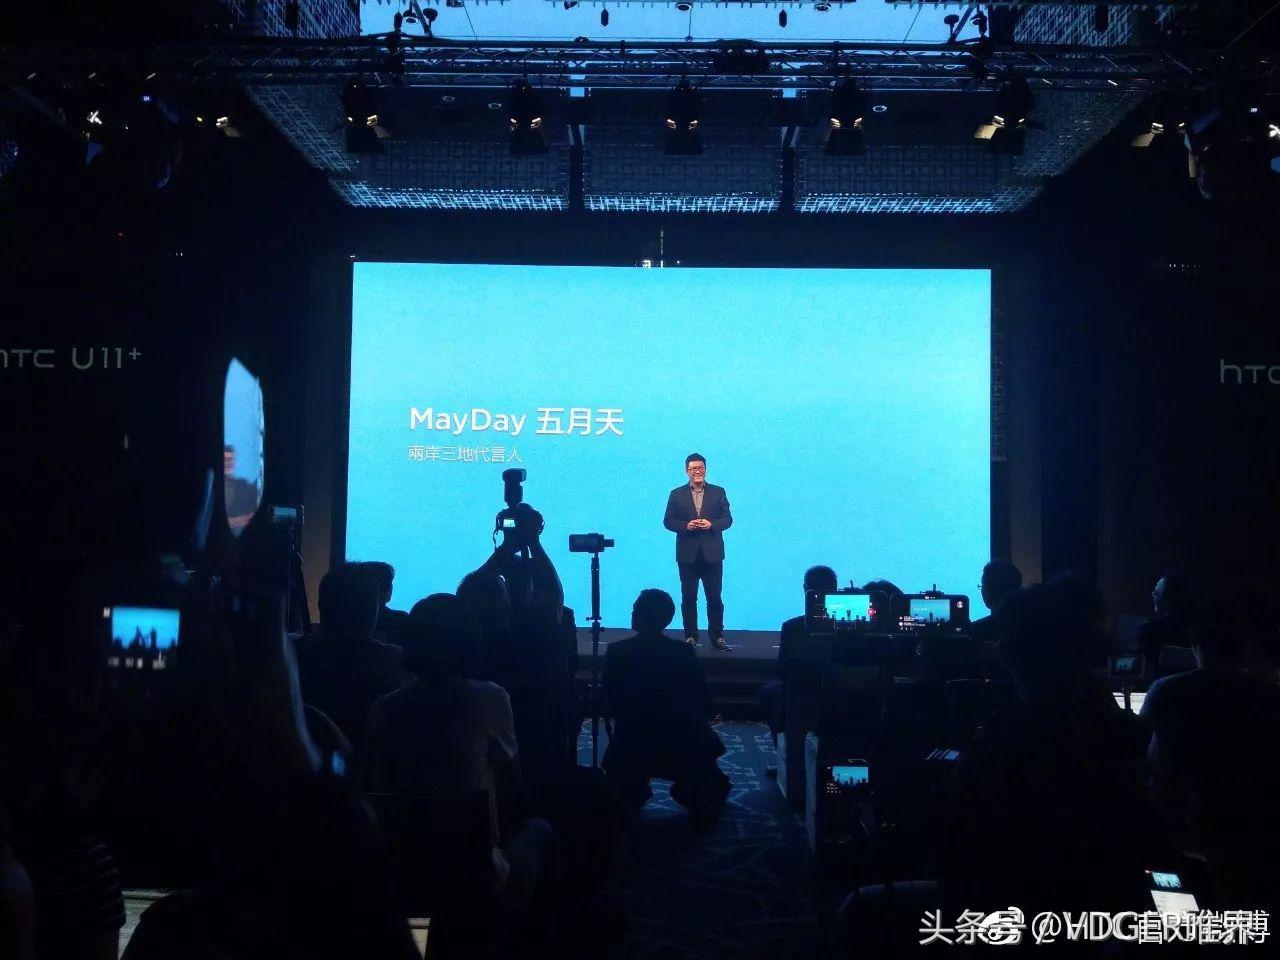 OPPO第一款全面屏手机R11s宣布出场，透明色外壳HTC U11 宣布公布